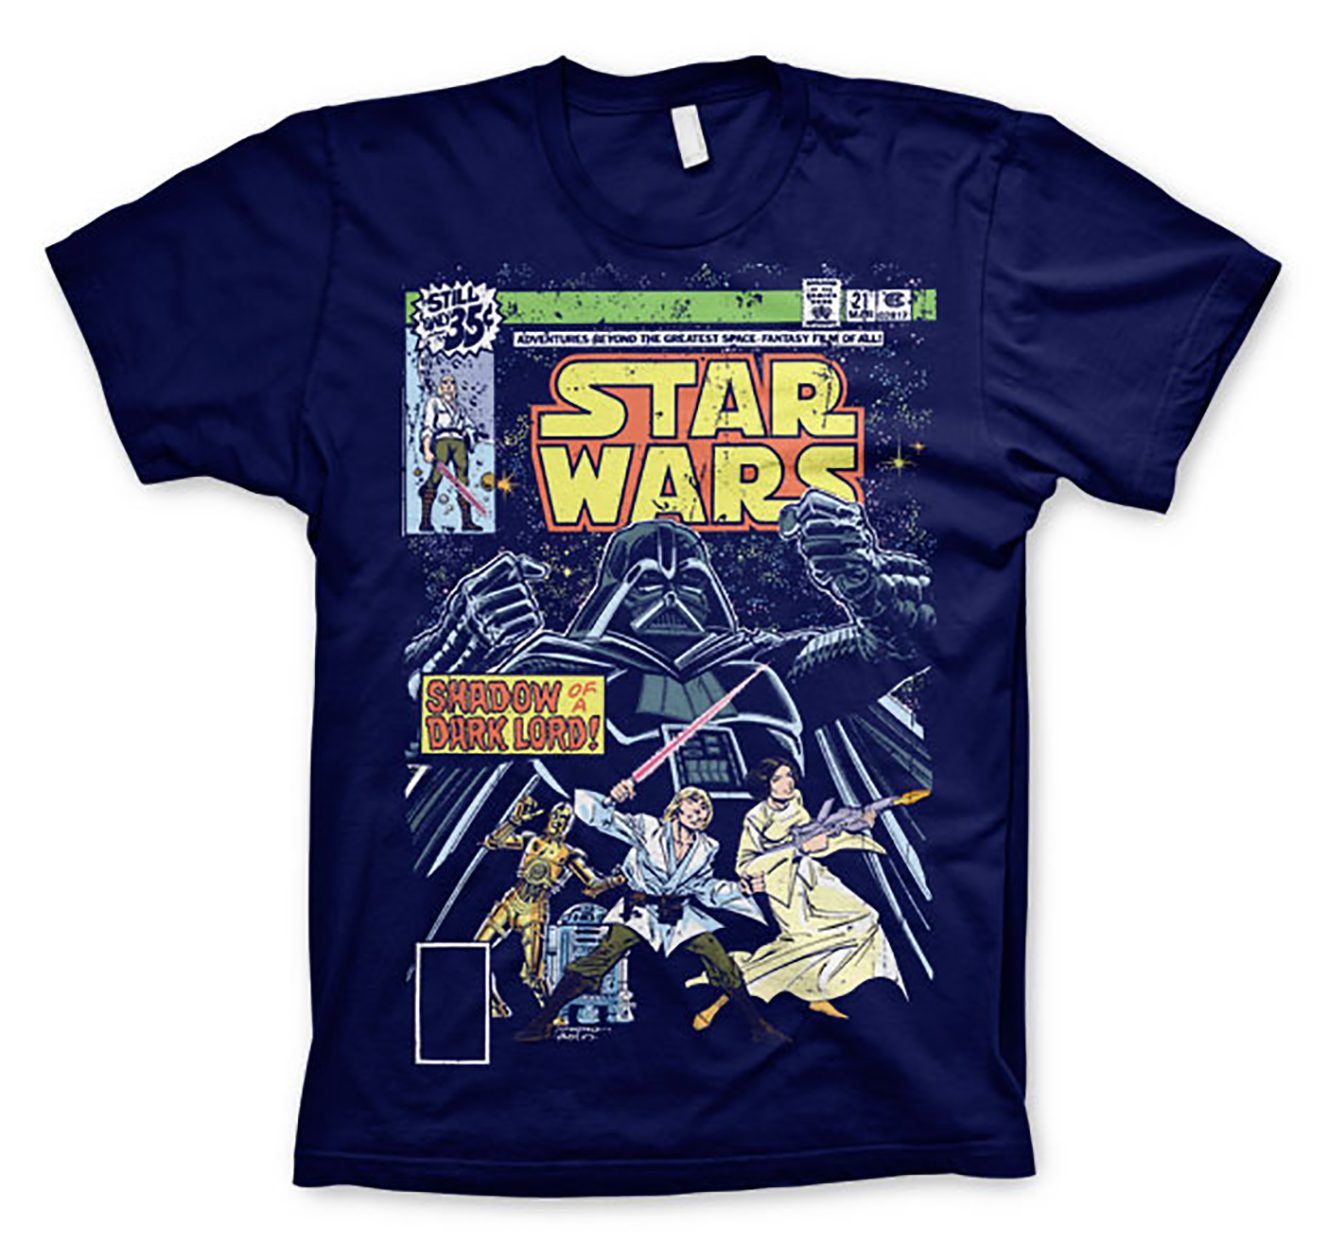 Navy Blue Star Wars Shadow Of A Dark Lord T-shirt